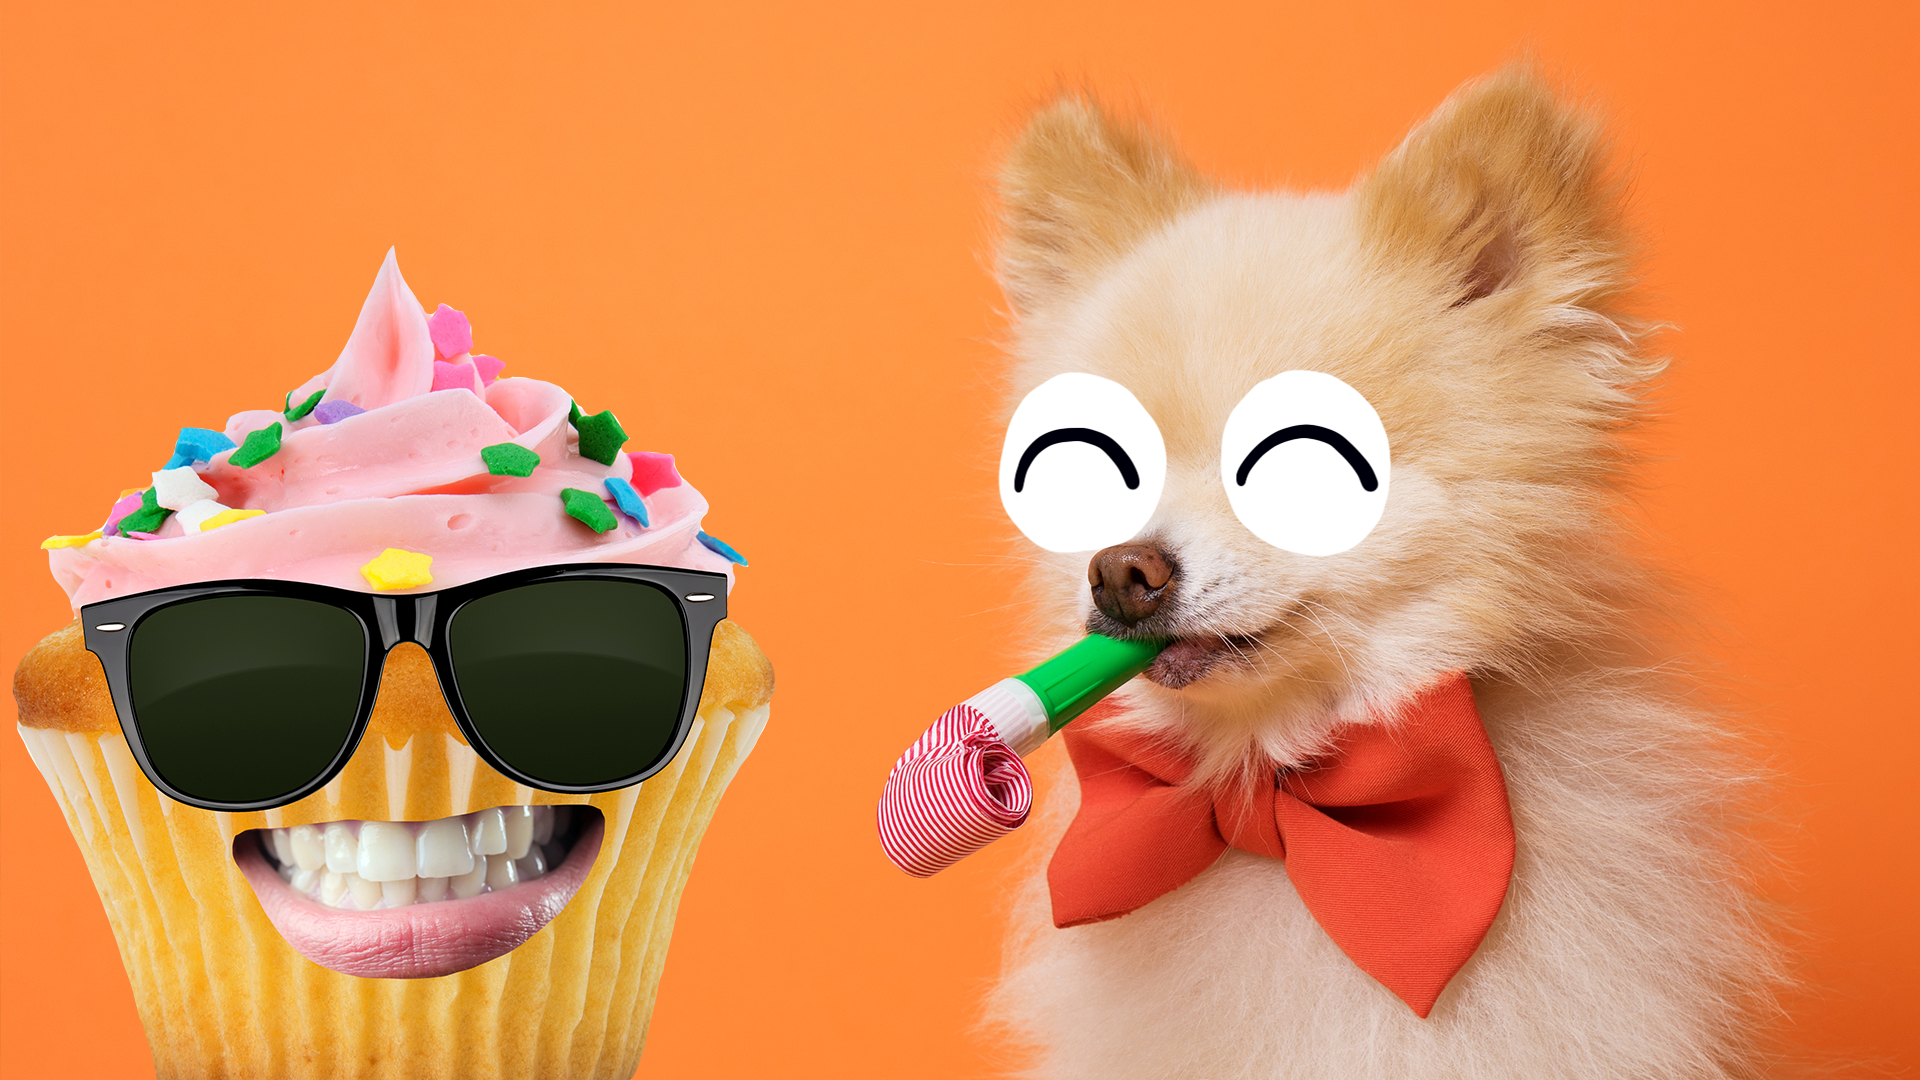 Birthday dog and cupcake on orange background